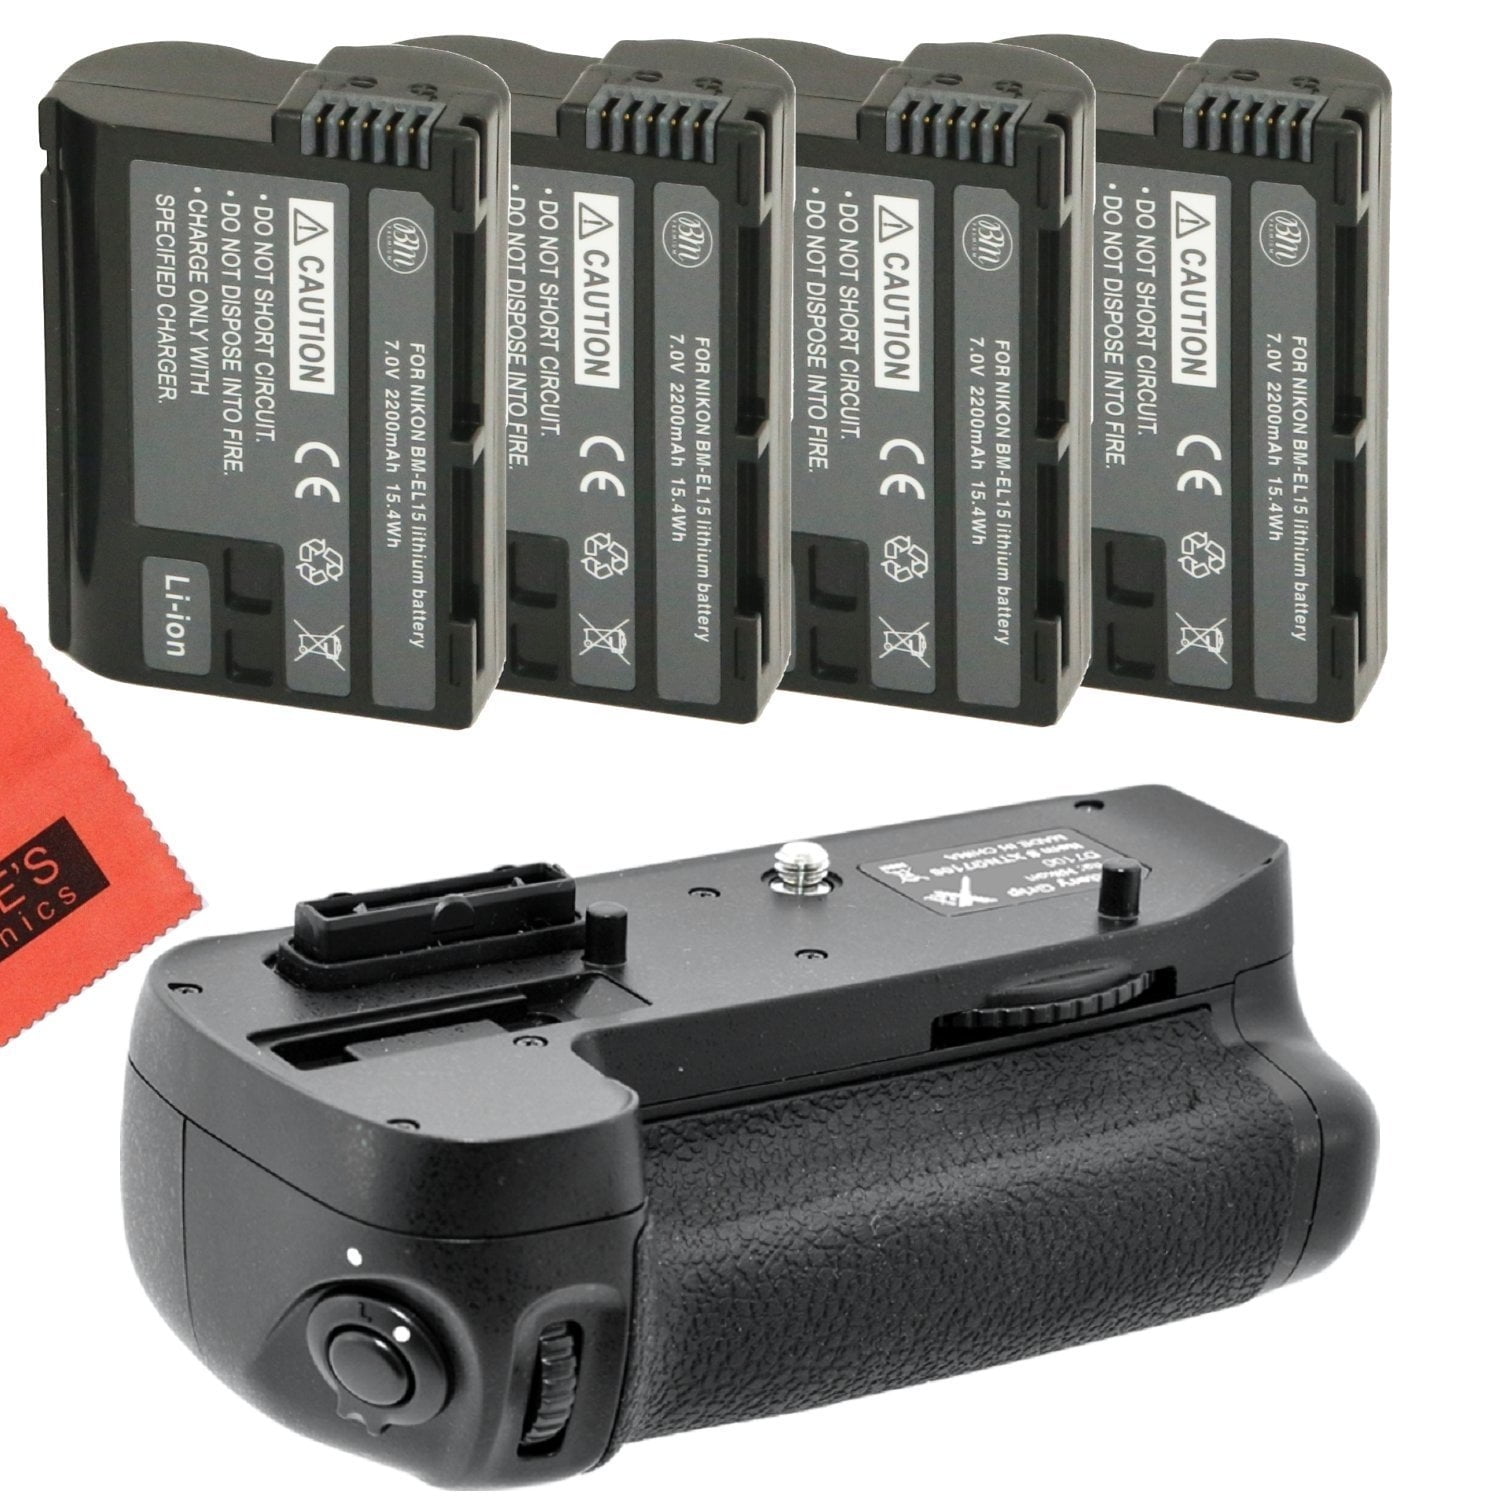  P Battery Compartment Multi-Purpose Handle  Battery Grip for Nikon D7100 D7200 DSLR Camera as MB-D15  